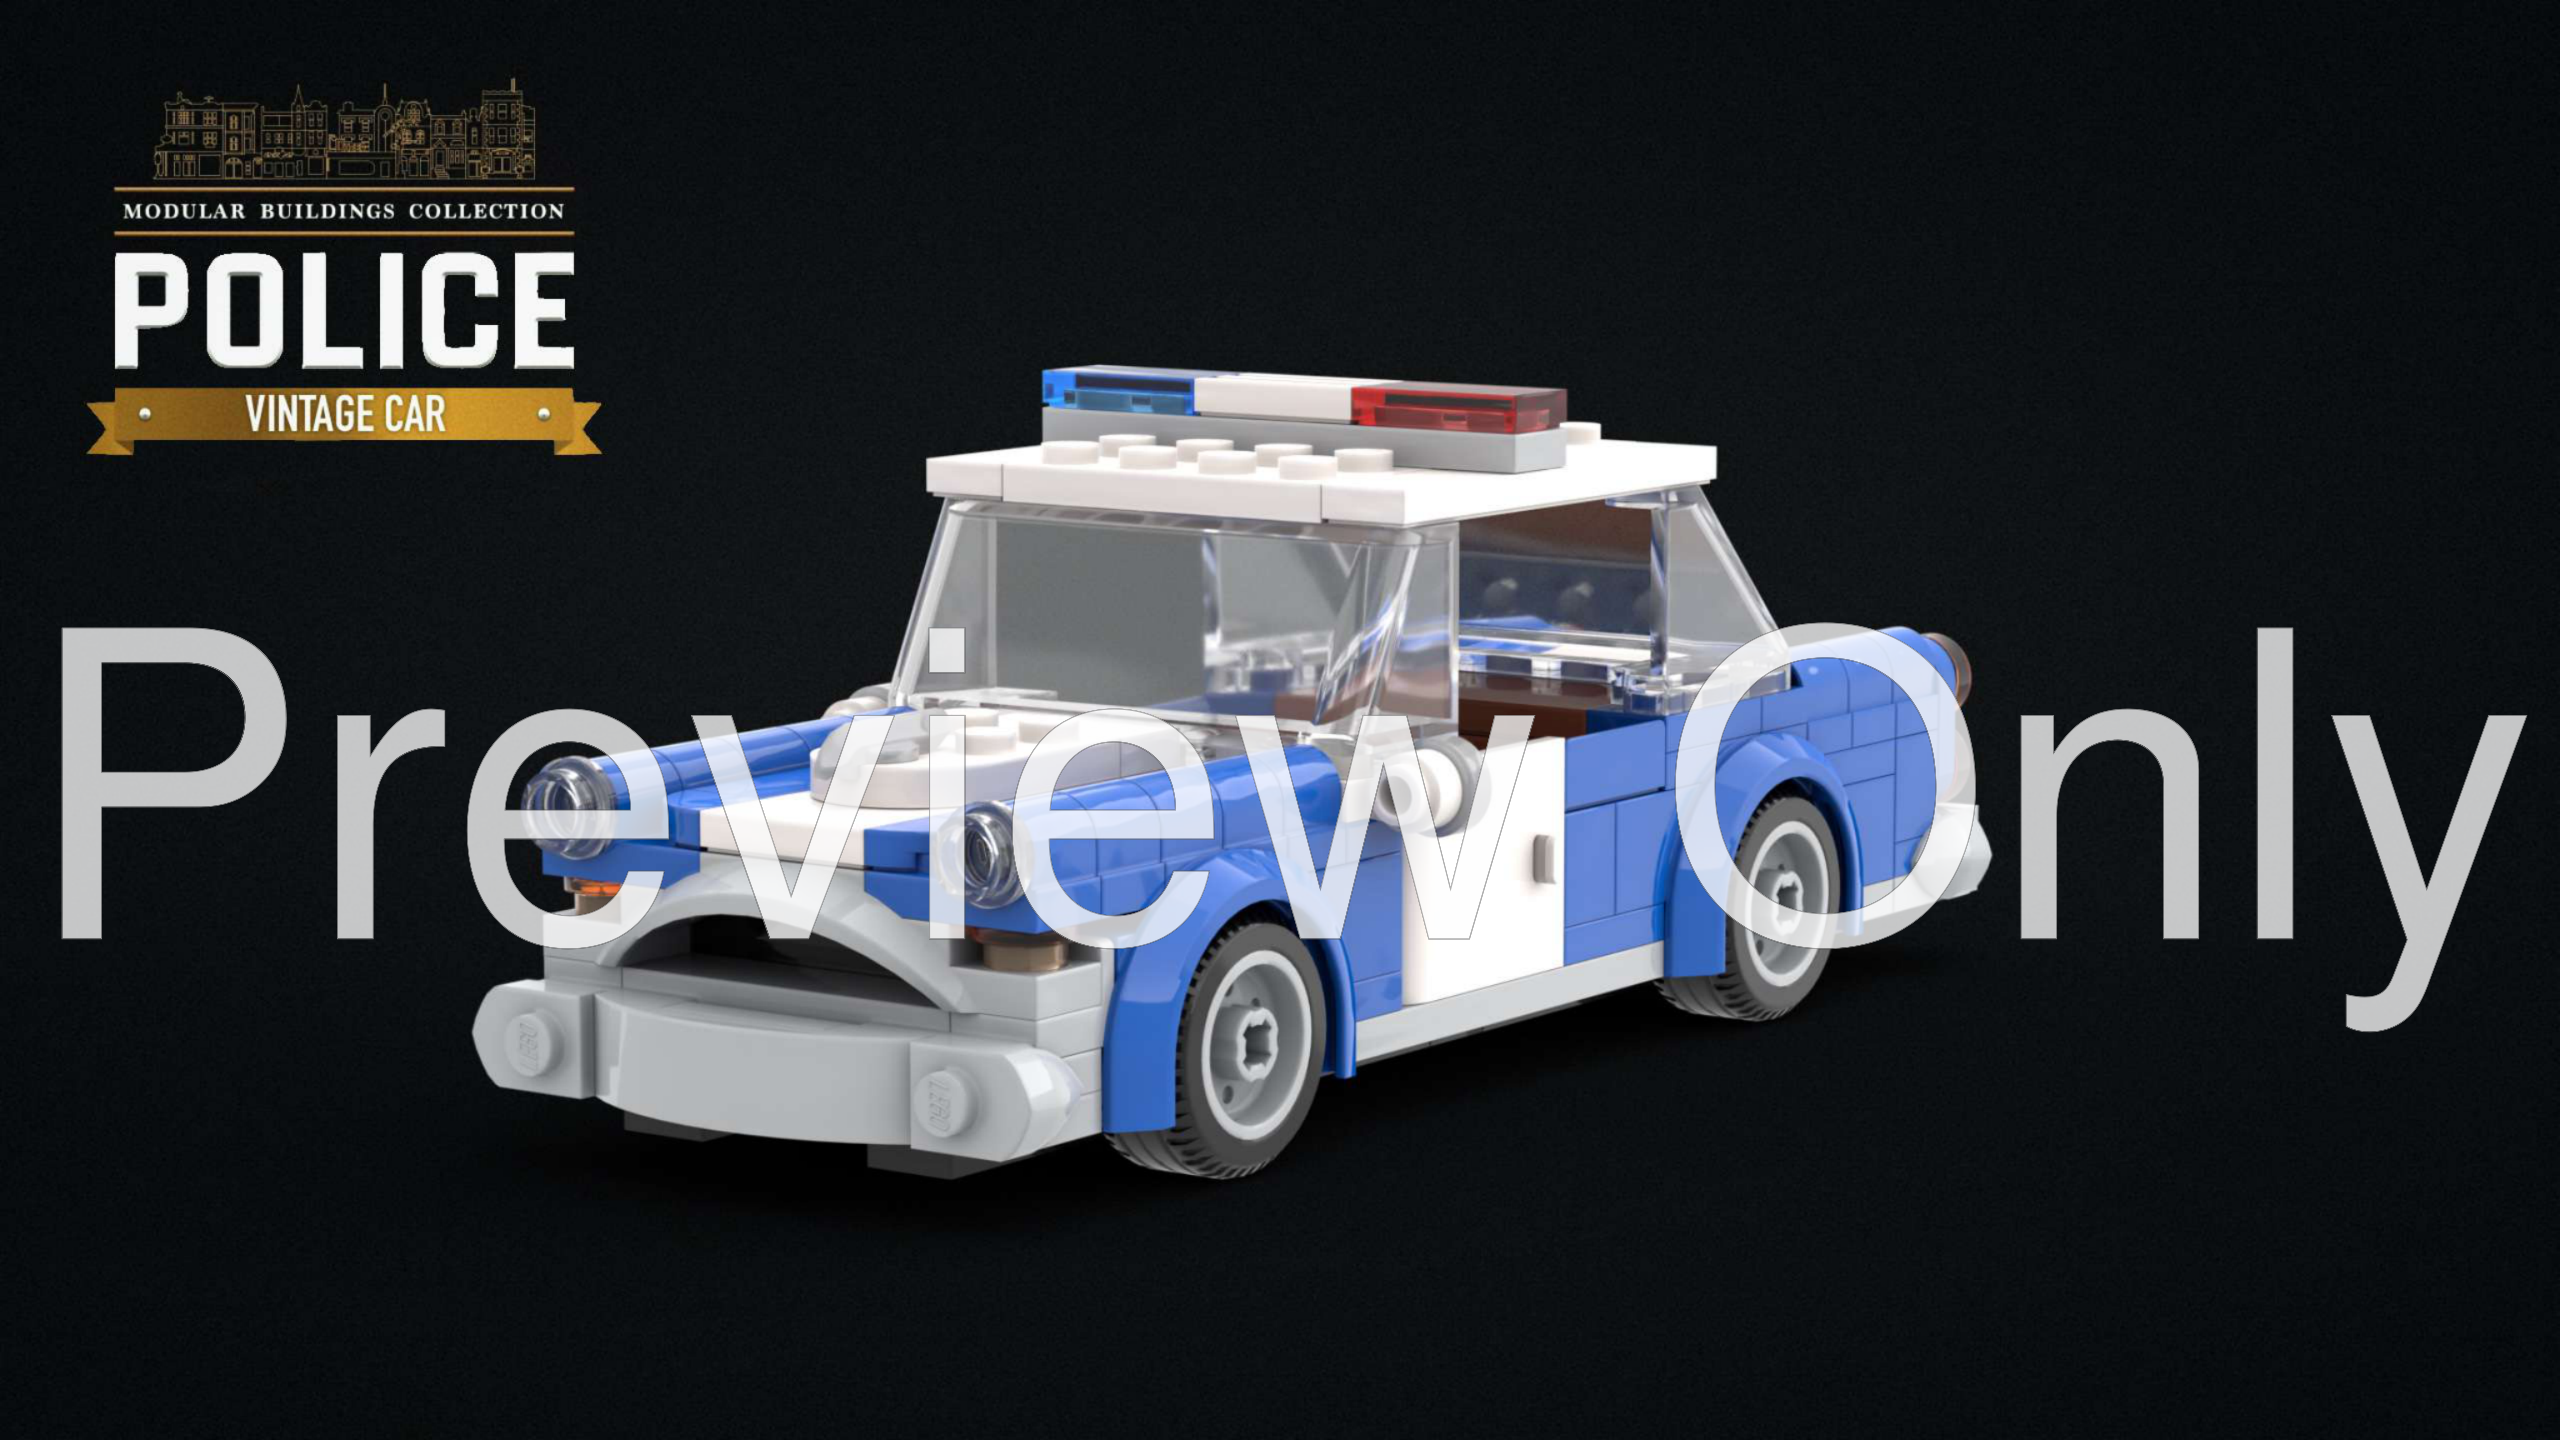 LEGO MOC Vintage Police Car by Beneklx - Build with LEGO